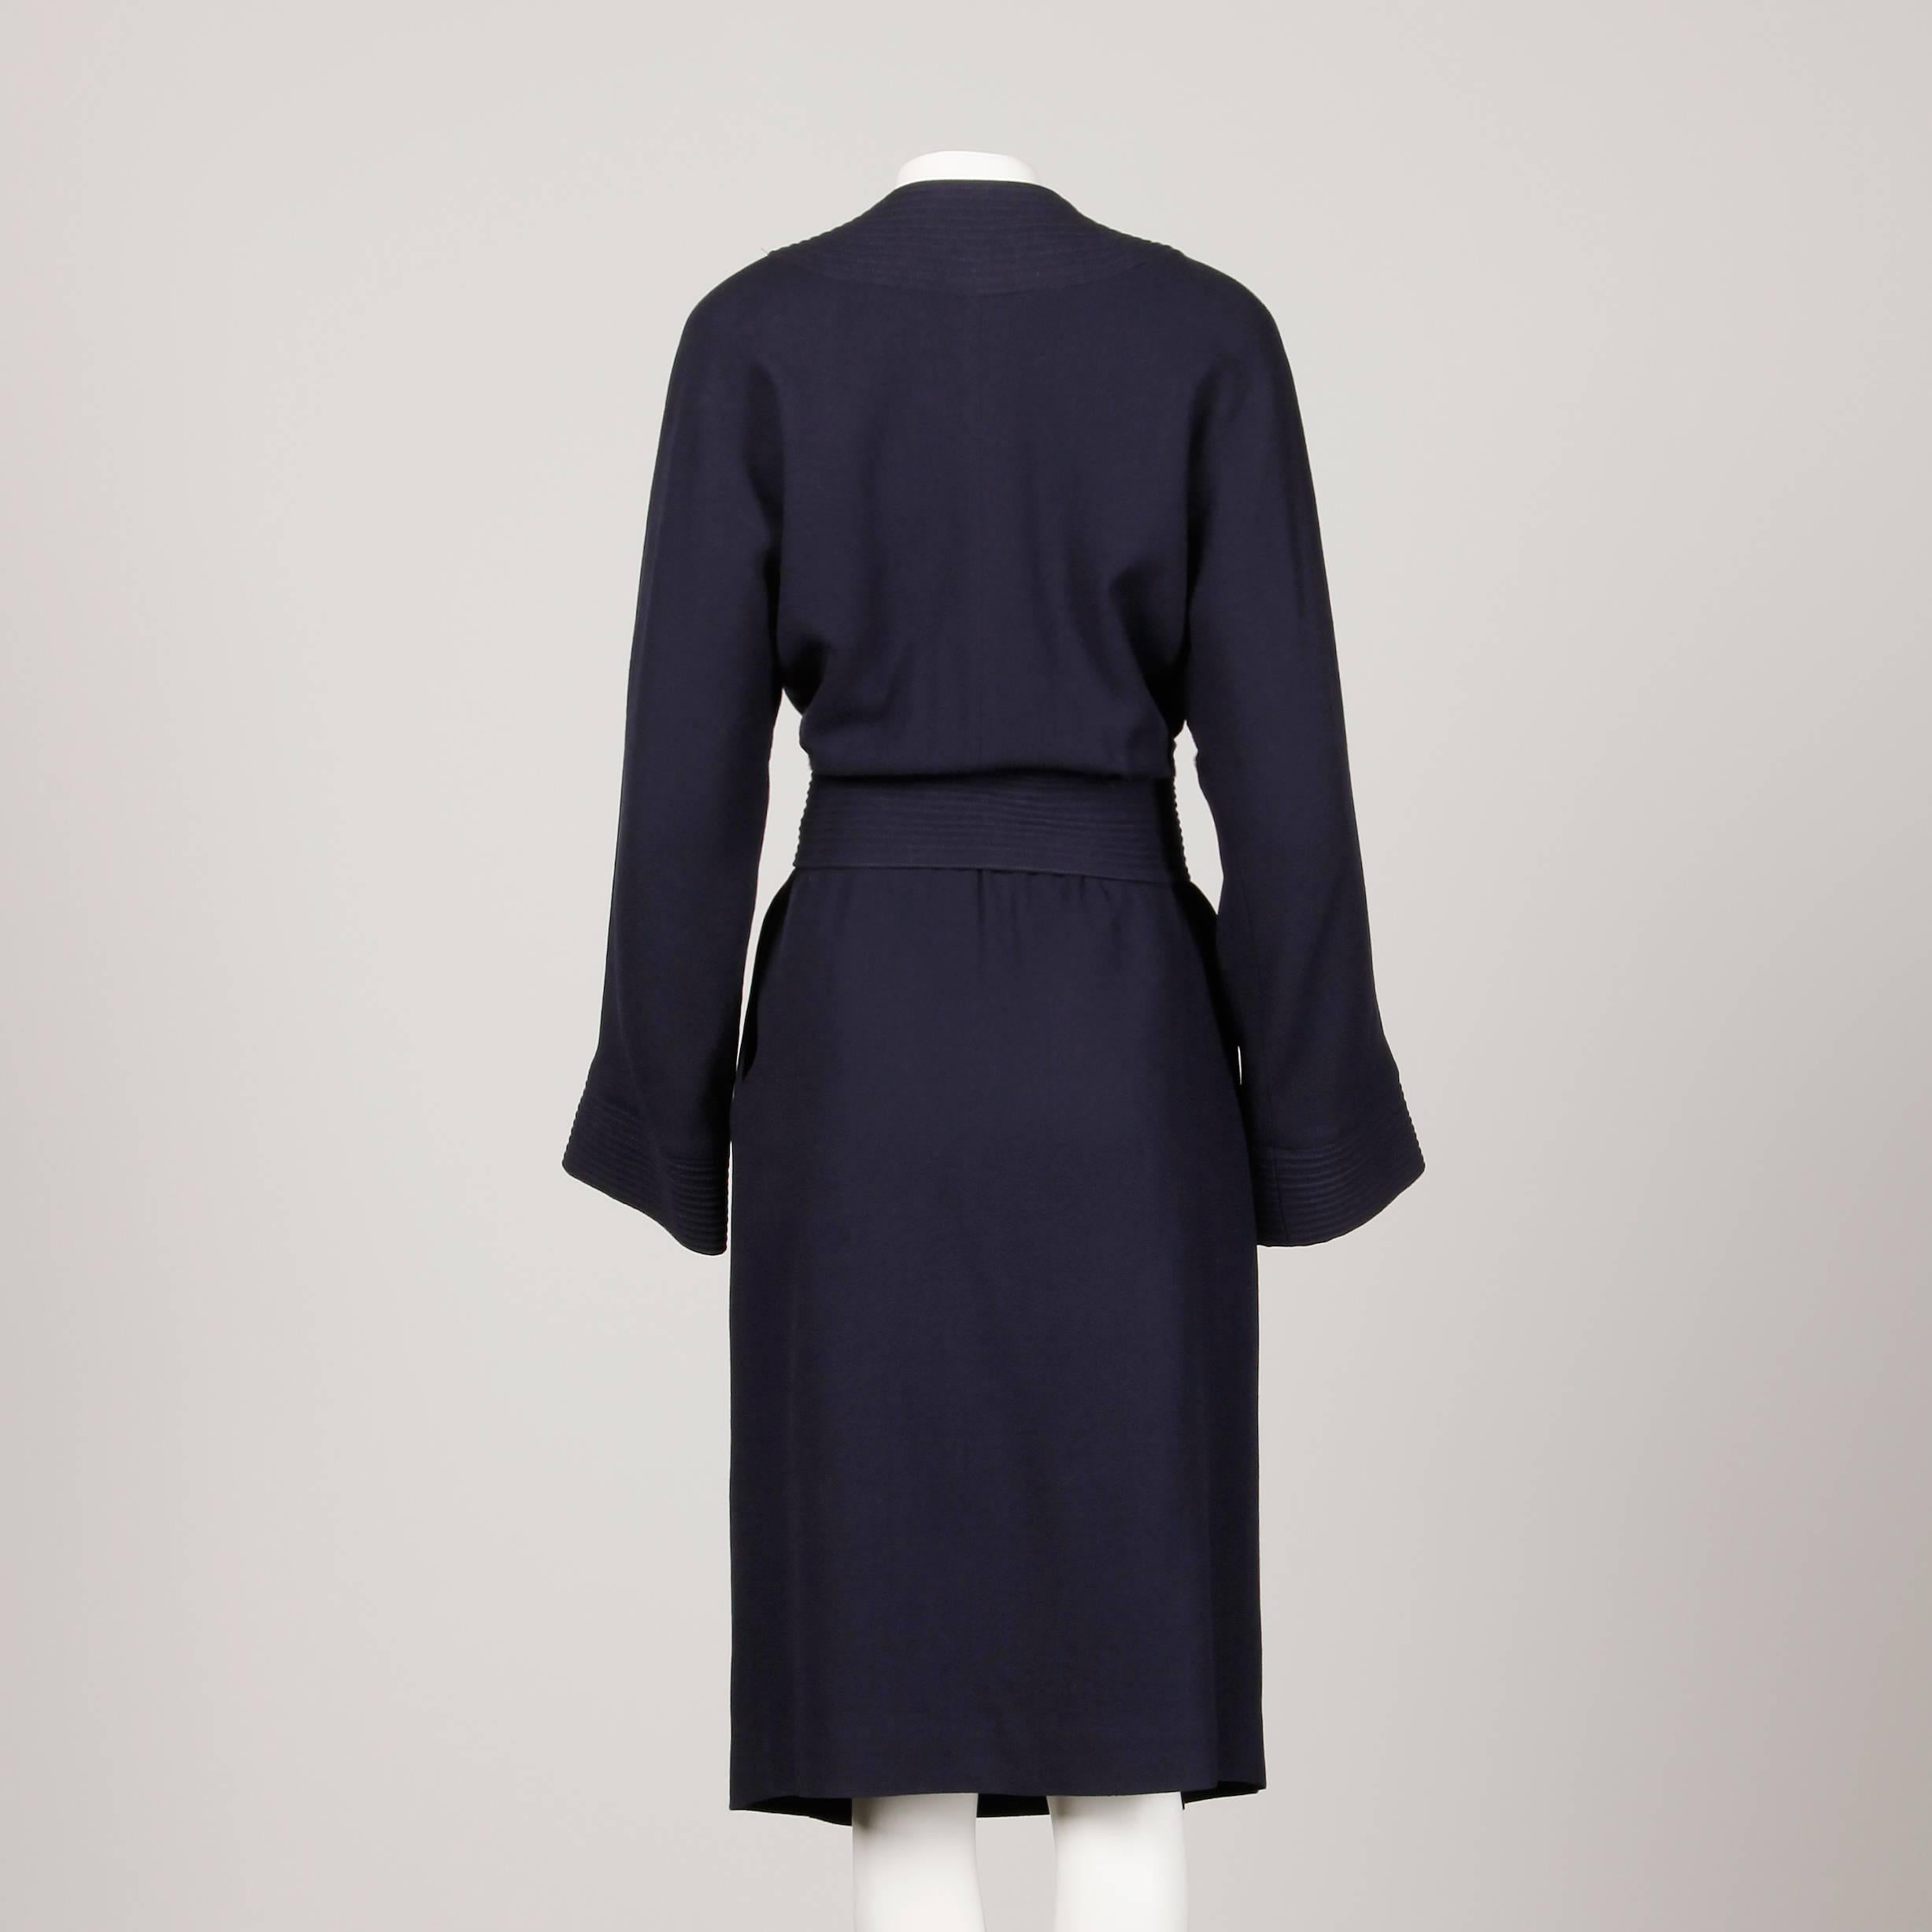 Black 1970s Donald Brooks Vintage Navy Blue Wool Jacket + Skirt Suit Ensemble